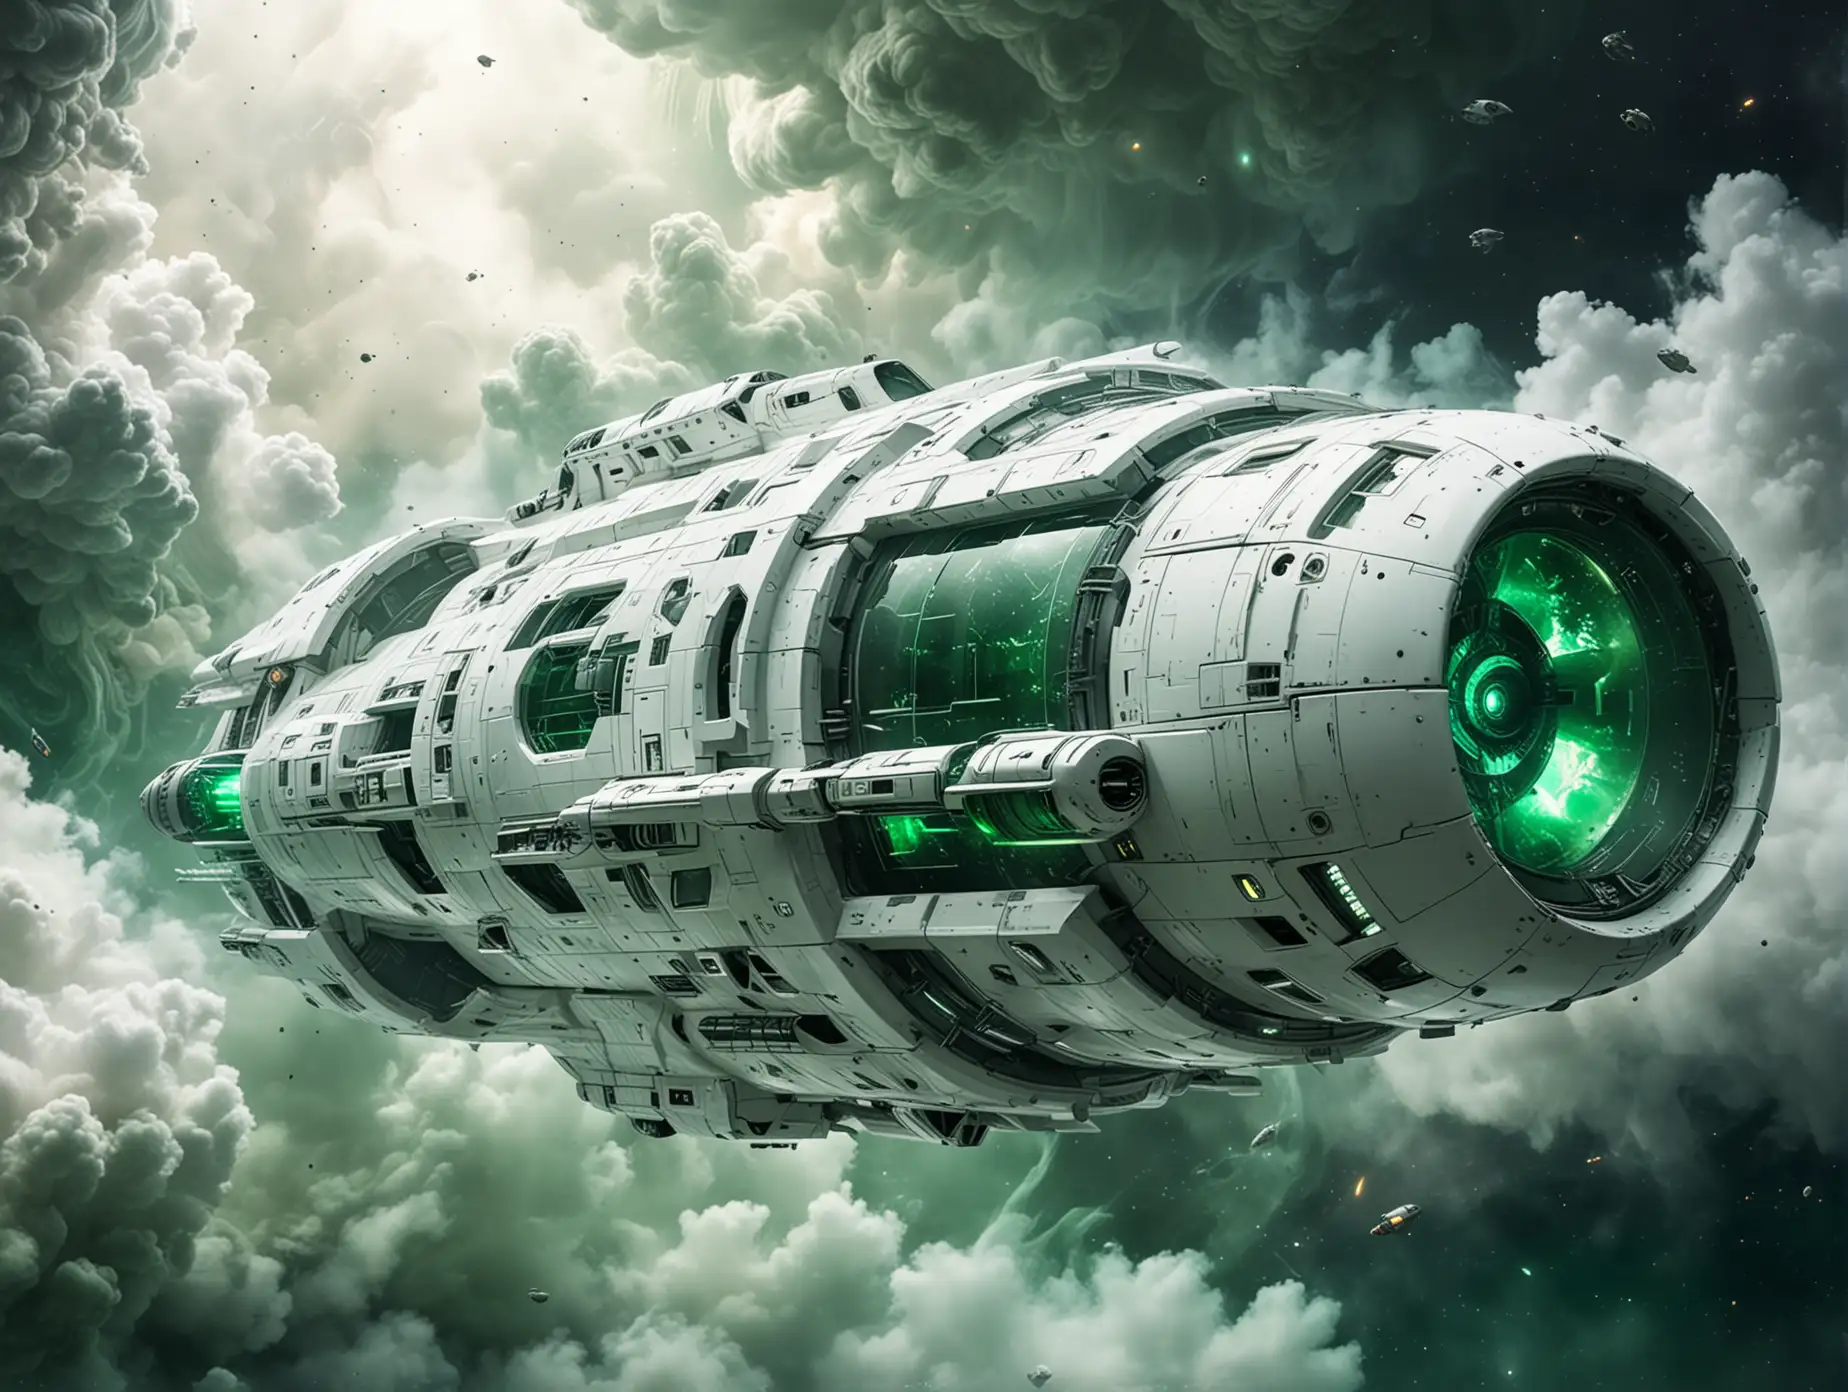 Futuristic-White-Spaceship-Emitting-Green-Smoke-in-Outer-Space